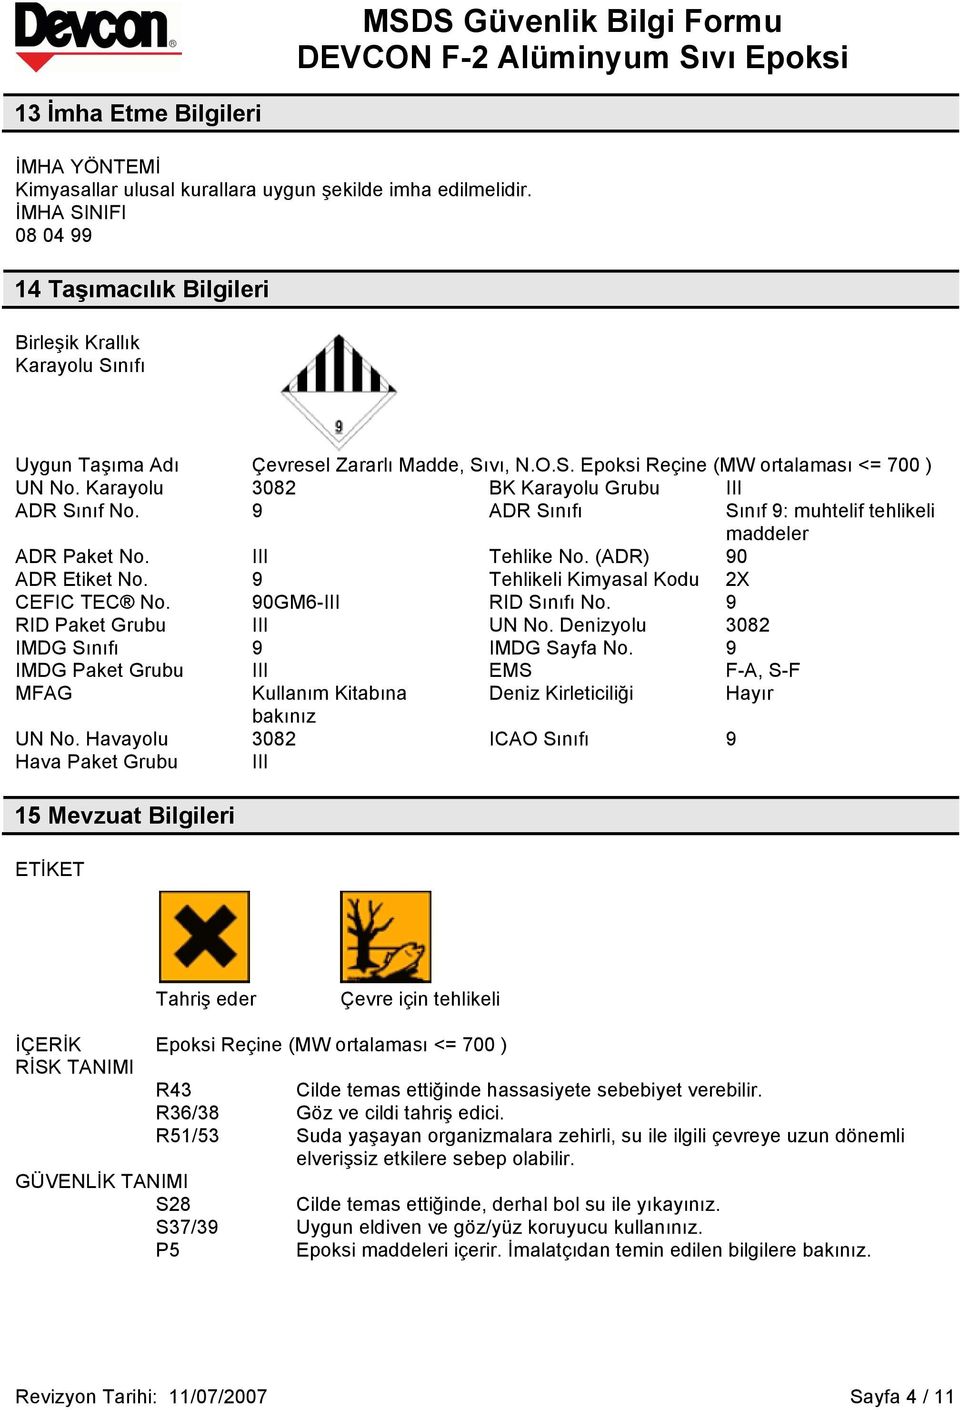 Karayolu 3082 BK Karayolu Grubu III ADR Sınıf No. 9 ADR Sınıfı Sınıf 9: muhtelif tehlikeli maddeler ADR Paket No. III Tehlike No. (ADR) 90 ADR Etiket No. 9 Tehlikeli Kimyasal Kodu 2X CEFIC TEC No.